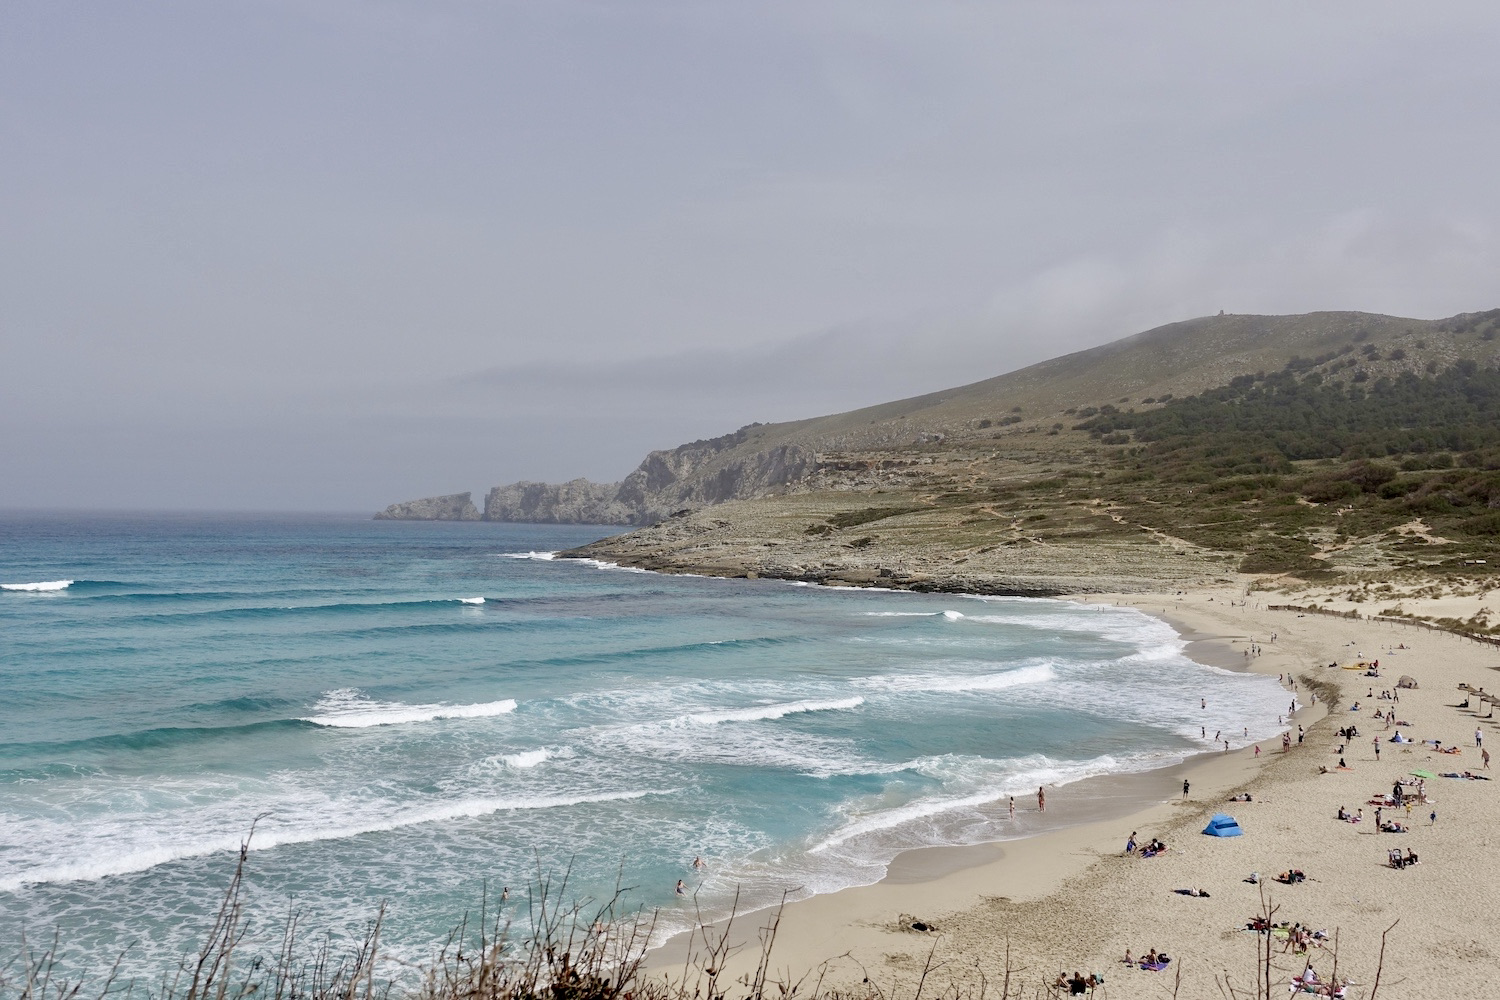 tourism Mallorca/Spain: sun, sand & sea, here Cala Mesquida